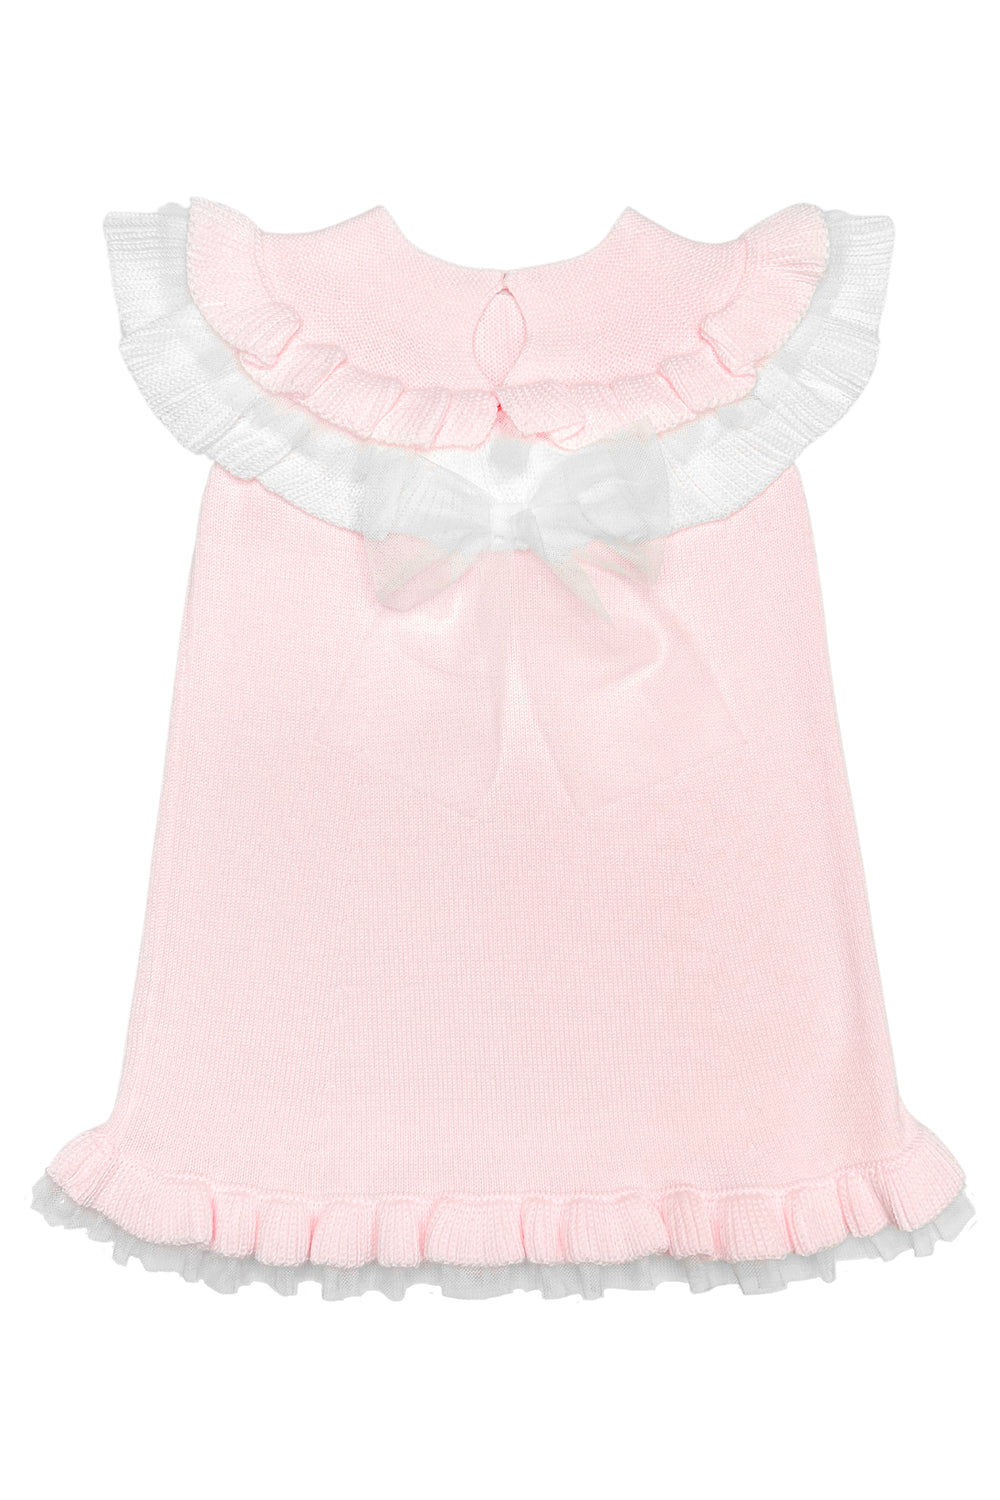 Granlei "Giselle" Baby Pink Knit Tulle Dress | Millie and John